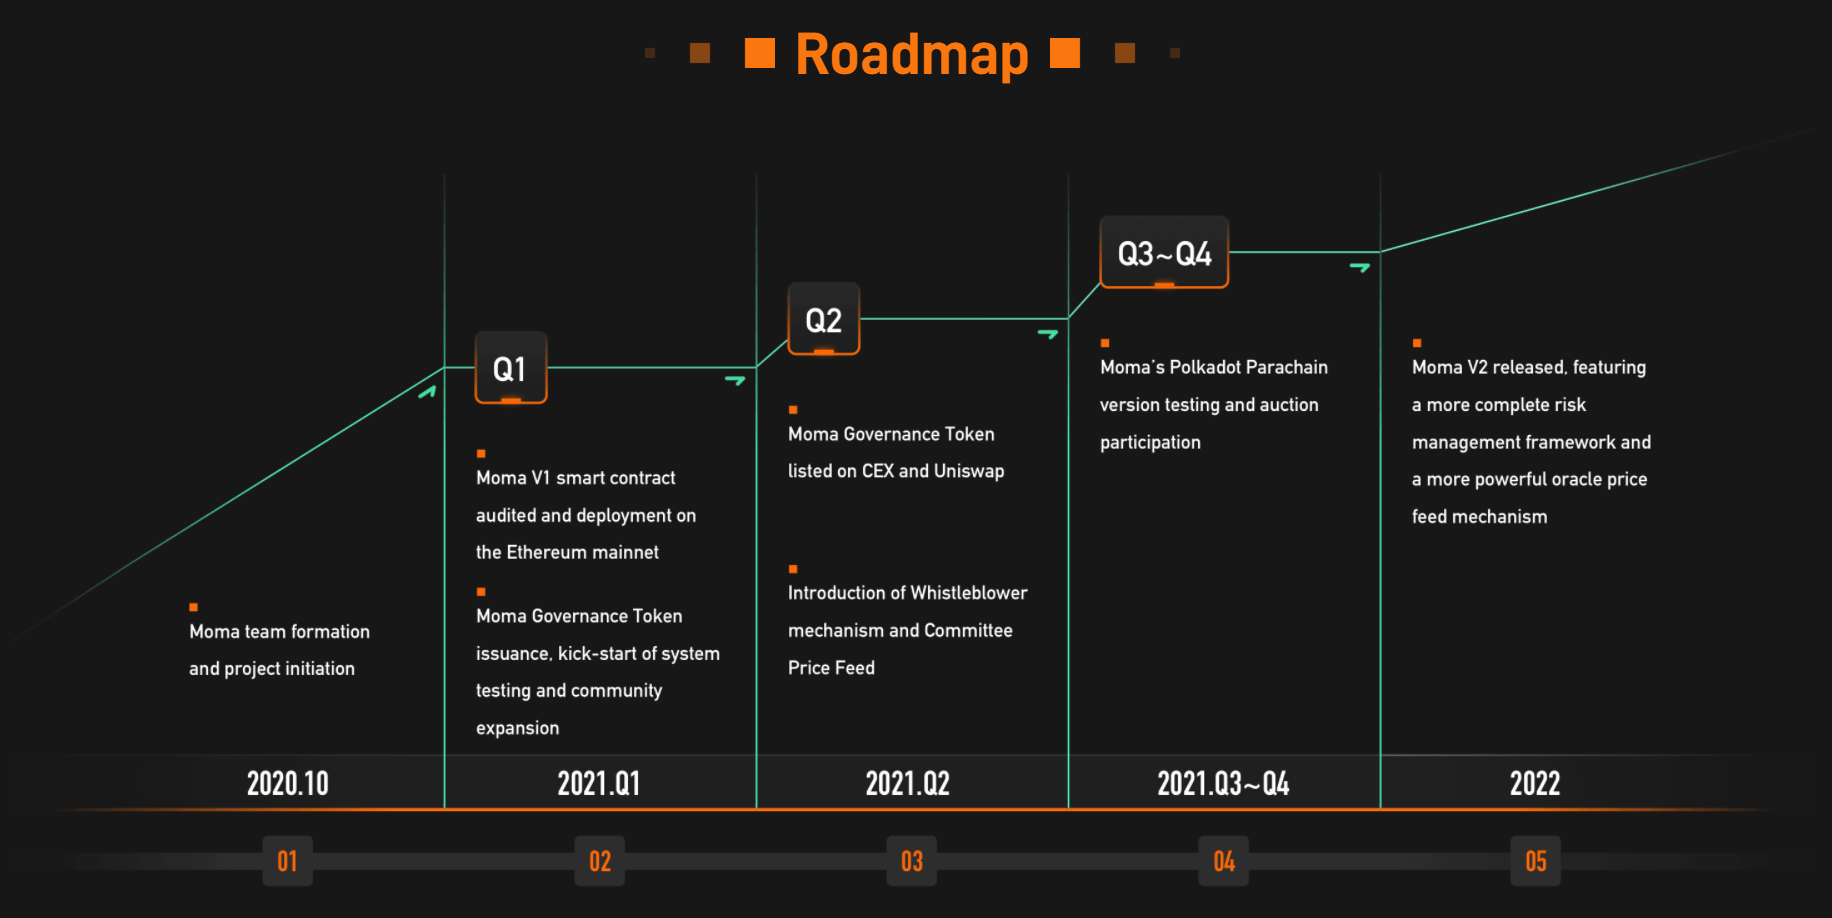 Roadmap MOMAT